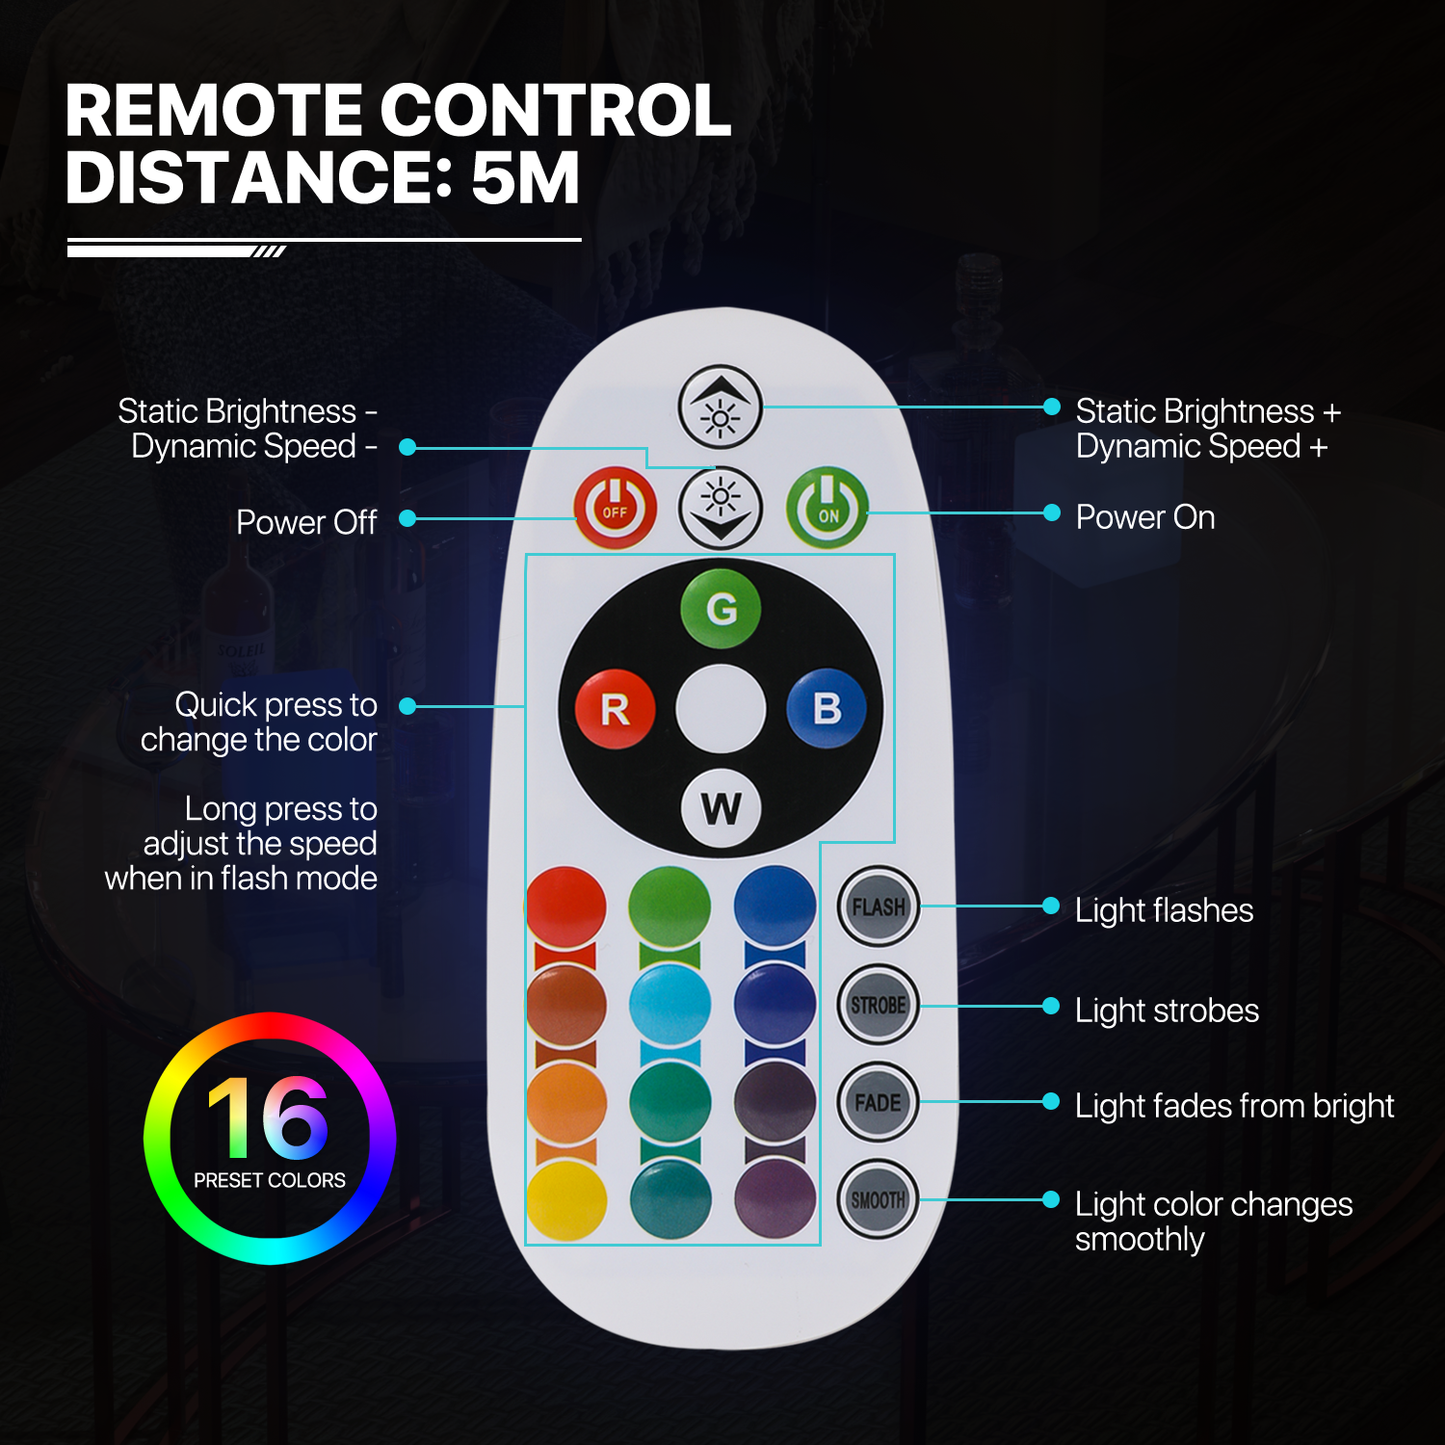 LED - Decor Light - 6''Cube - 16 Colors Remote Control